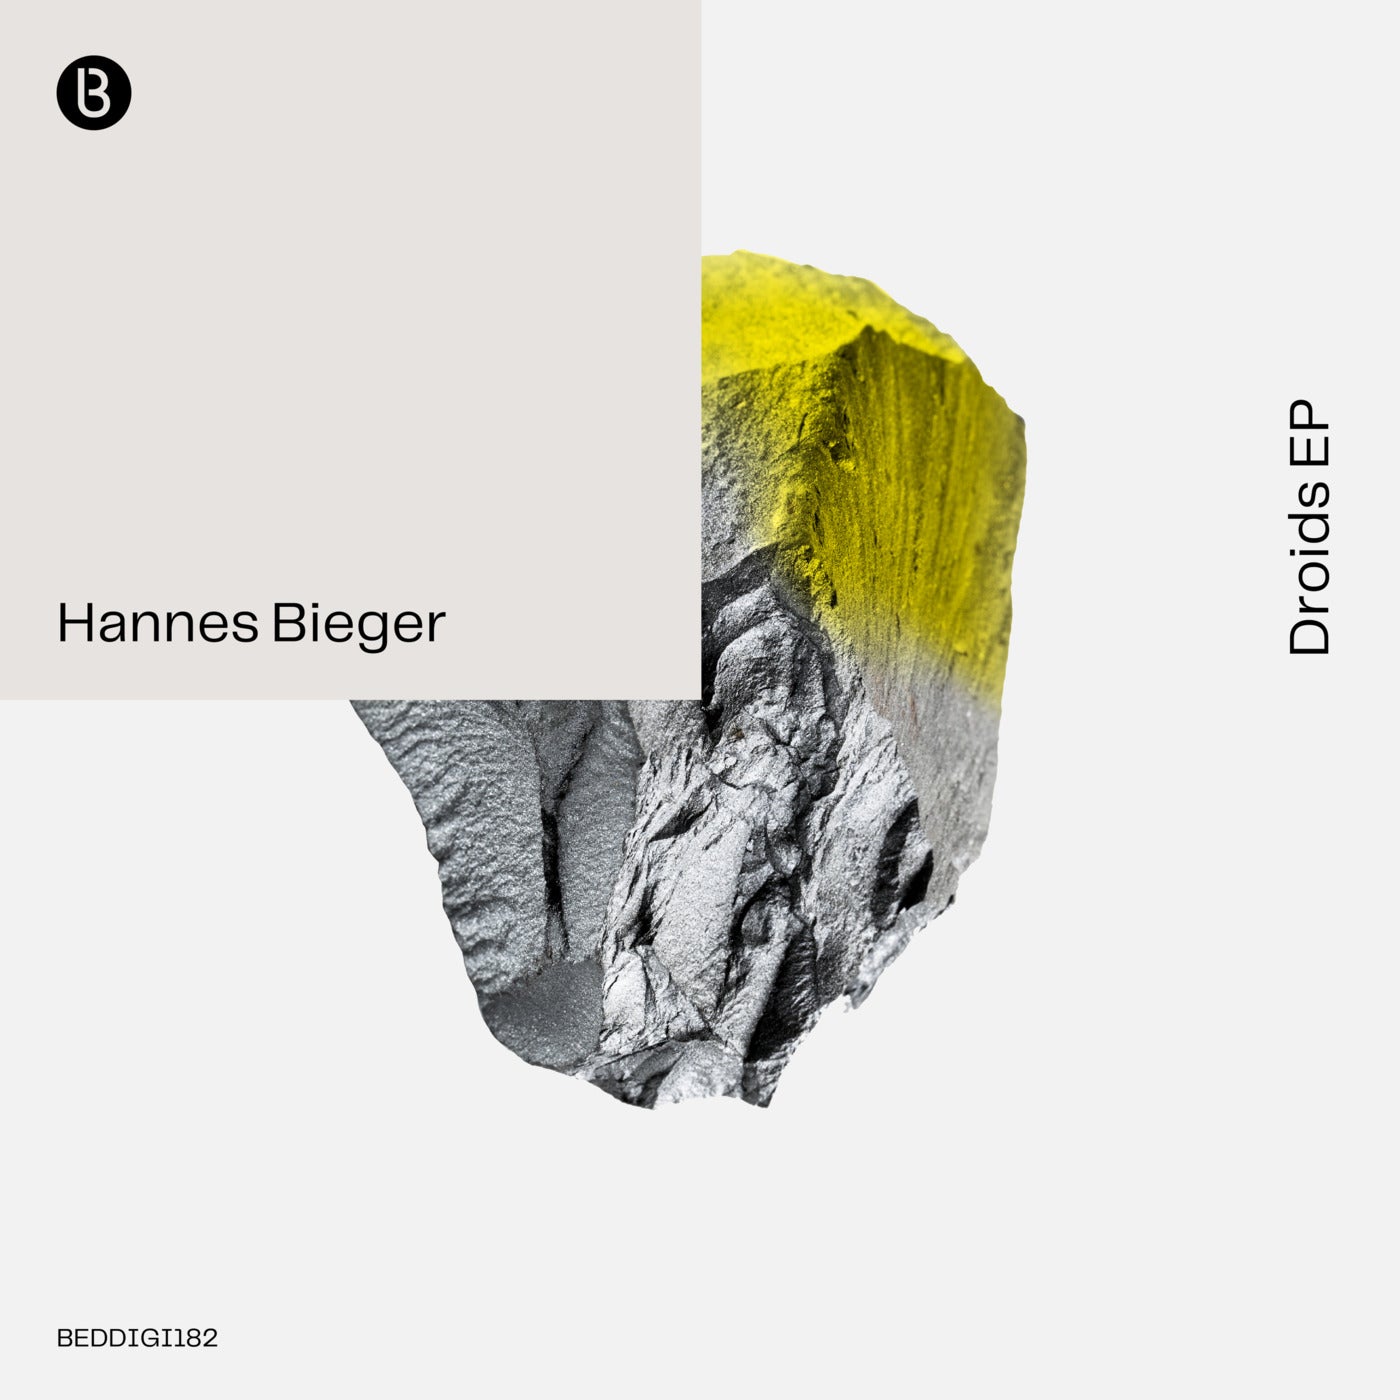 Download Hannes Bieger - Droids EP on Electrobuzz